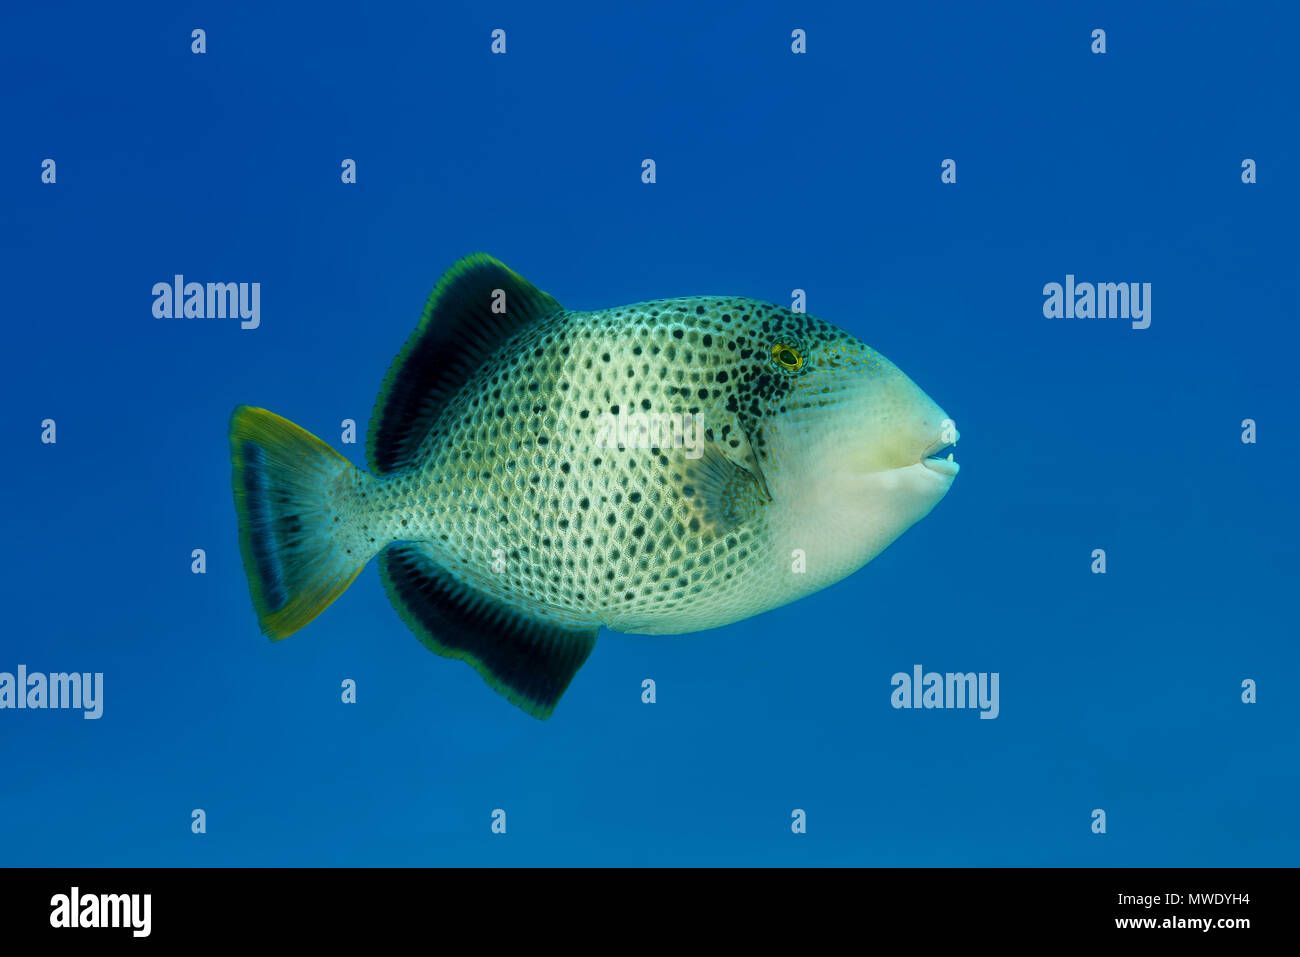 Indian Ocean, Maldives. 14th Mar, 2018. Yellowmargin Triggerfish (Pseudobalistes flavimarginatus) in the blue water Credit: Andrey Nekrasov/ZUMA Wire/ZUMAPRESS.com/Alamy Live News Stock Photo